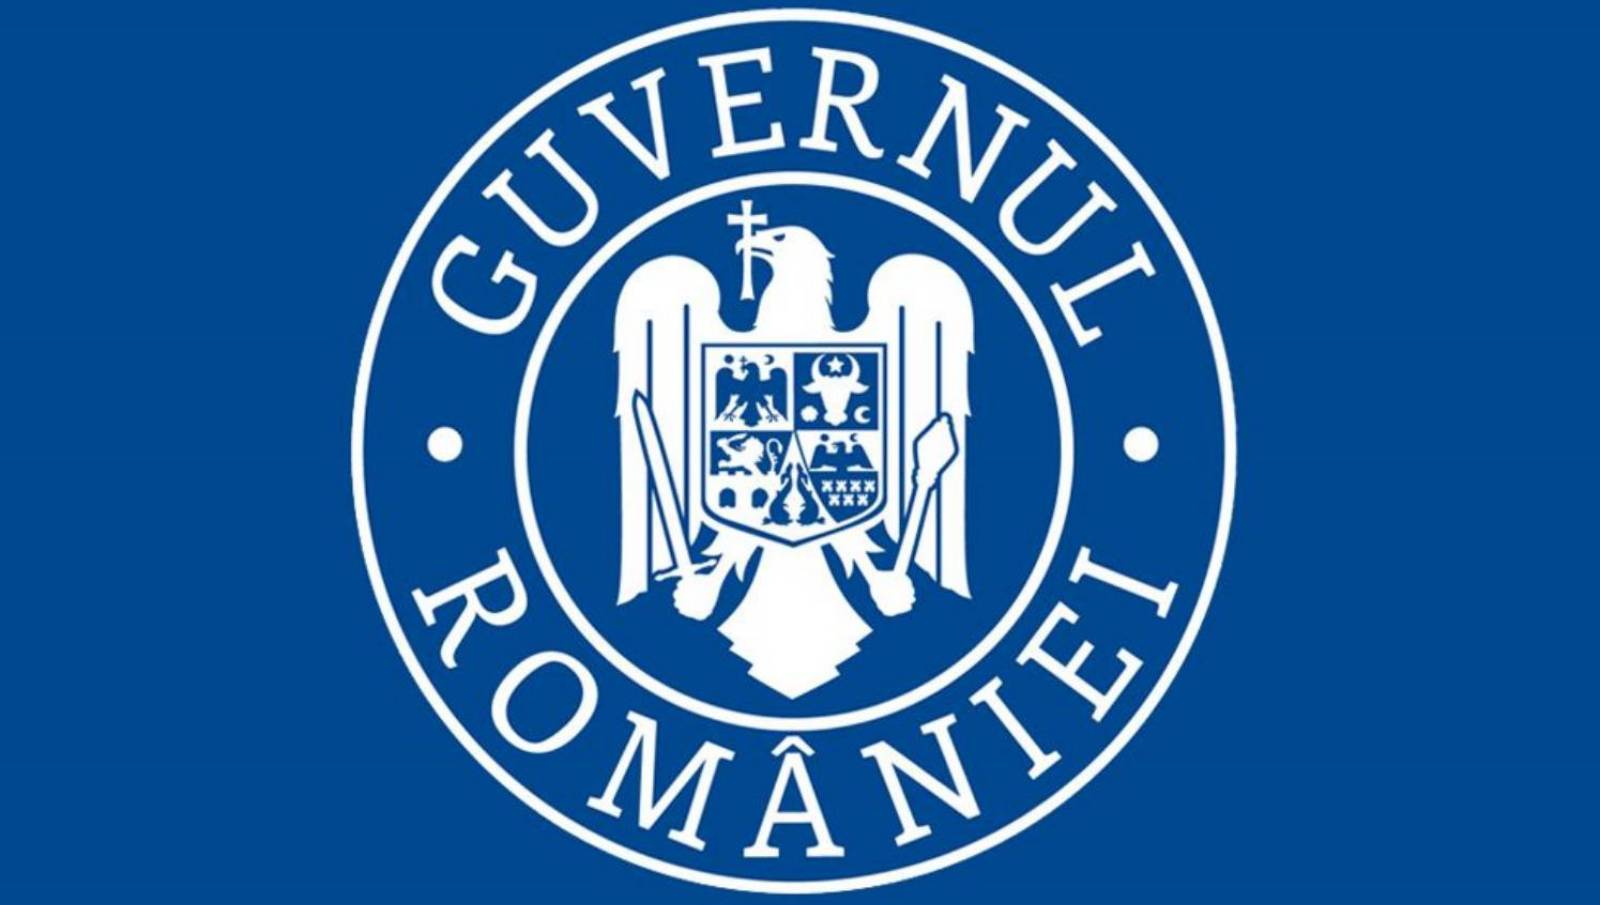 Guvernul Romaniei servicii bancare